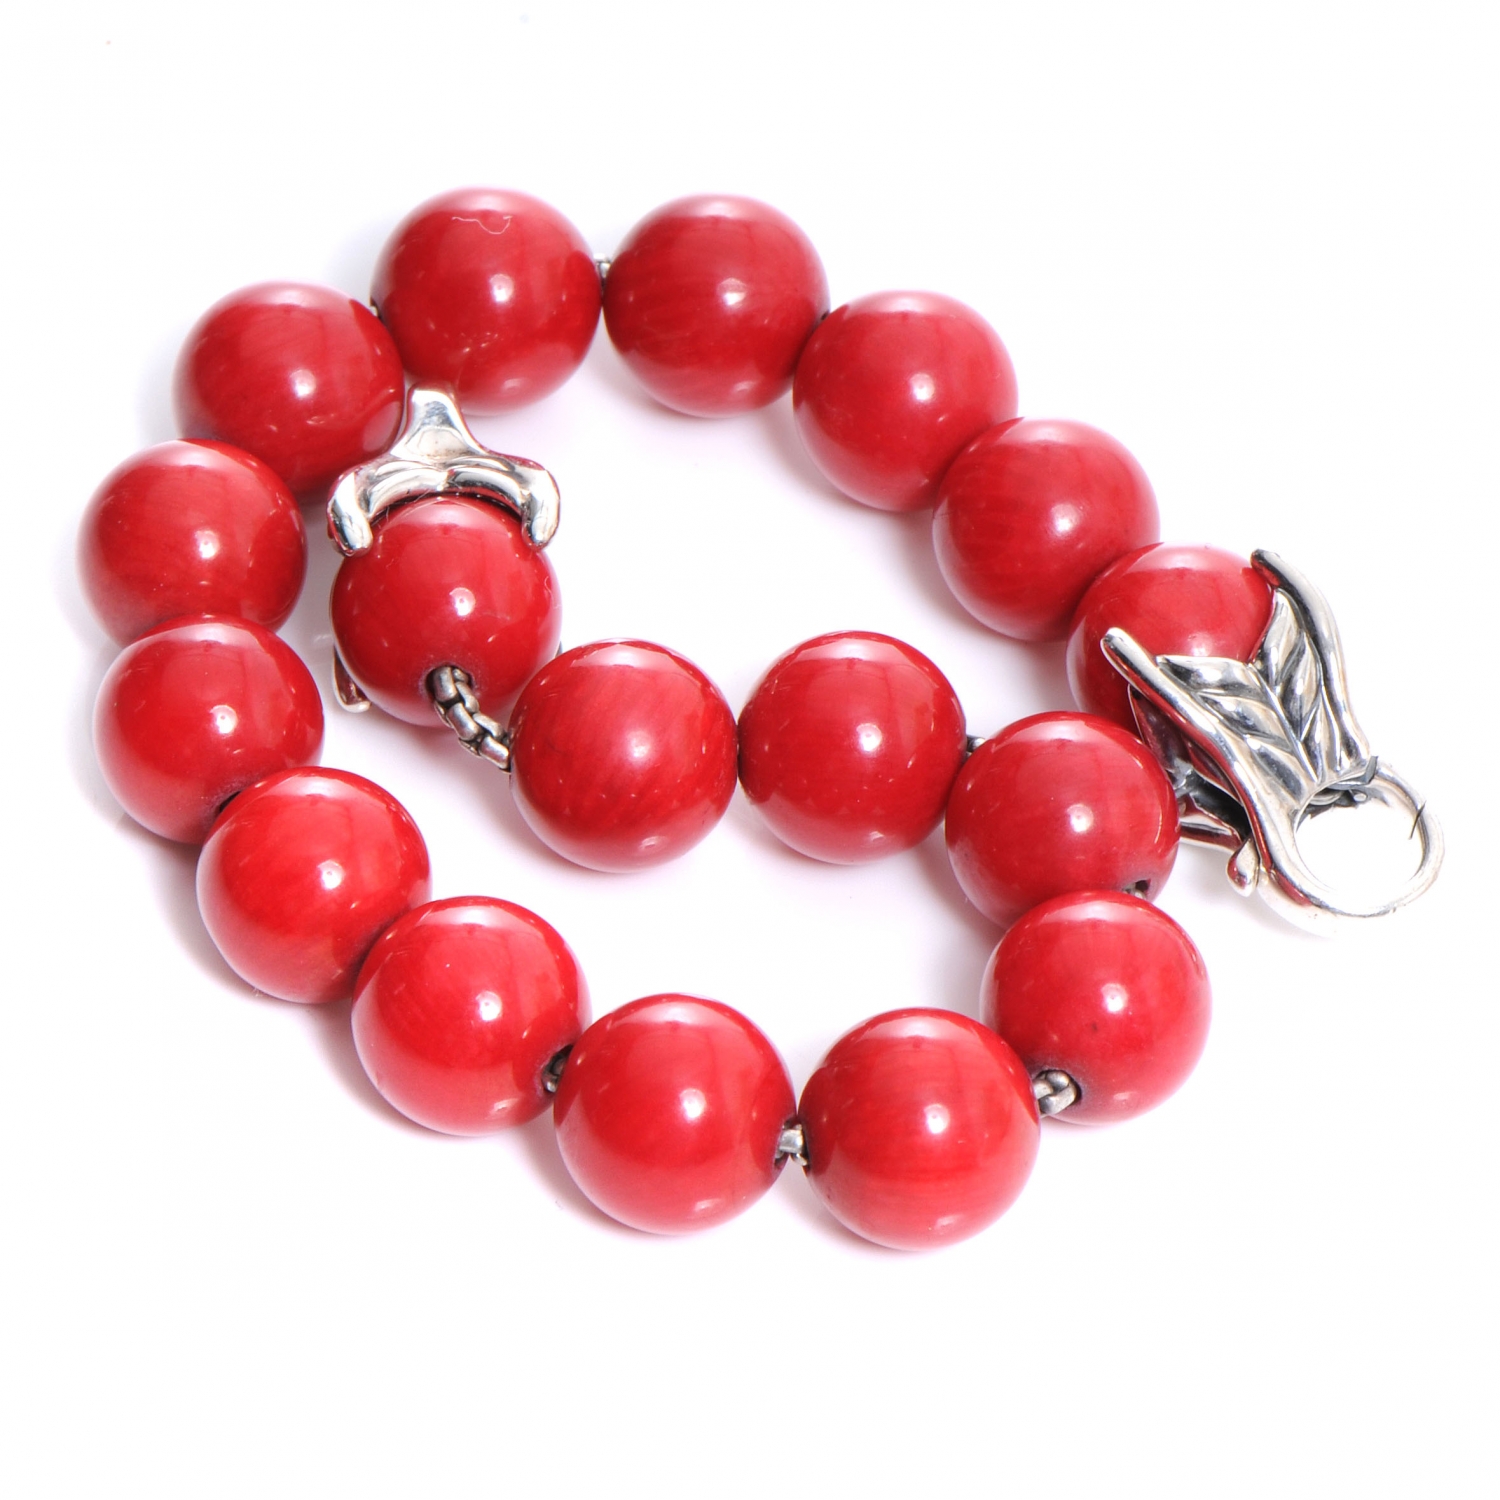 DAVID YURMAN Sterling Silver Coral Spiritual Beads Bracelet 47406